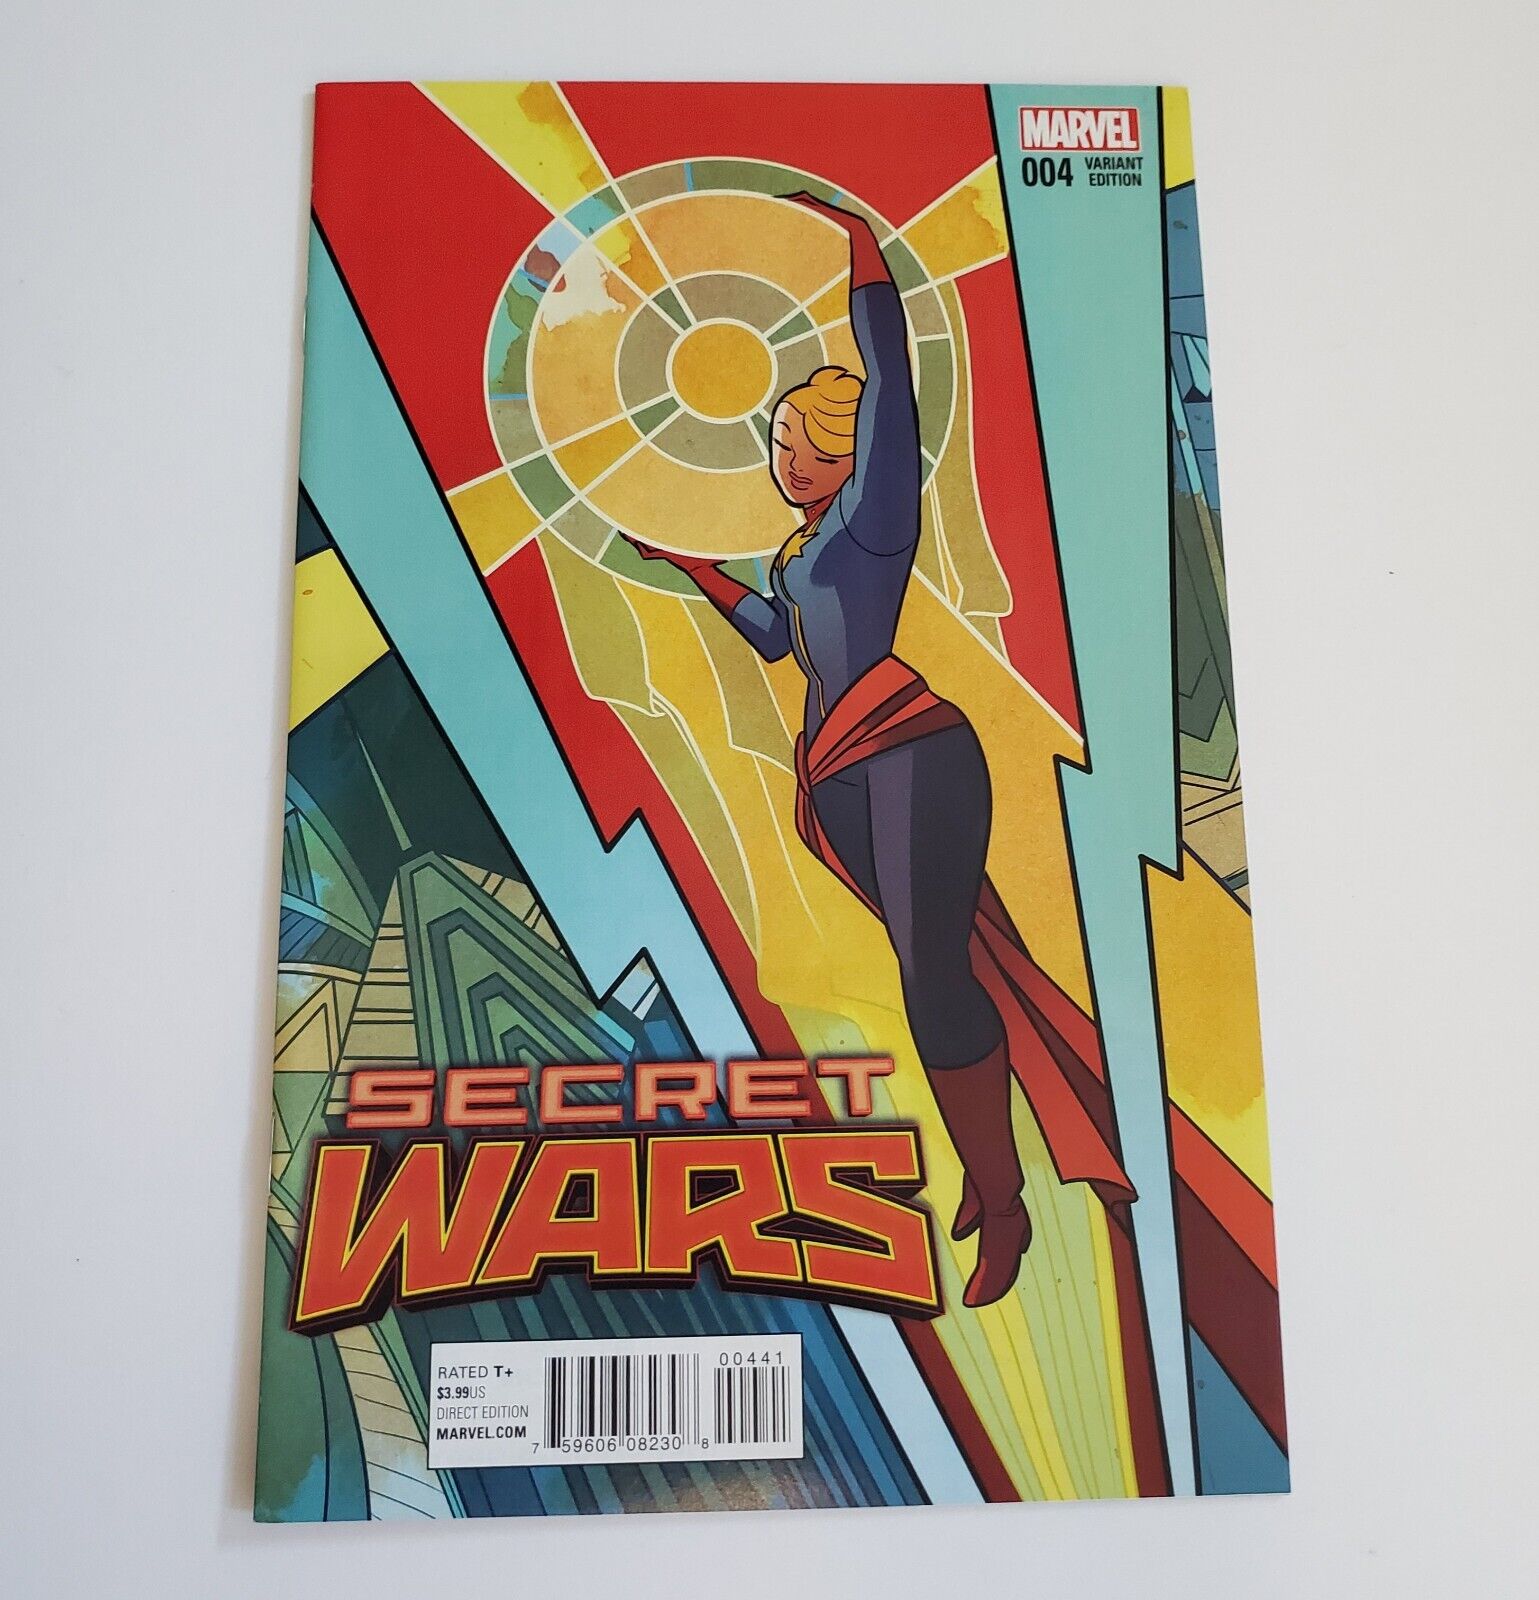 Secret Wars #4 (Marvel, September 2015)